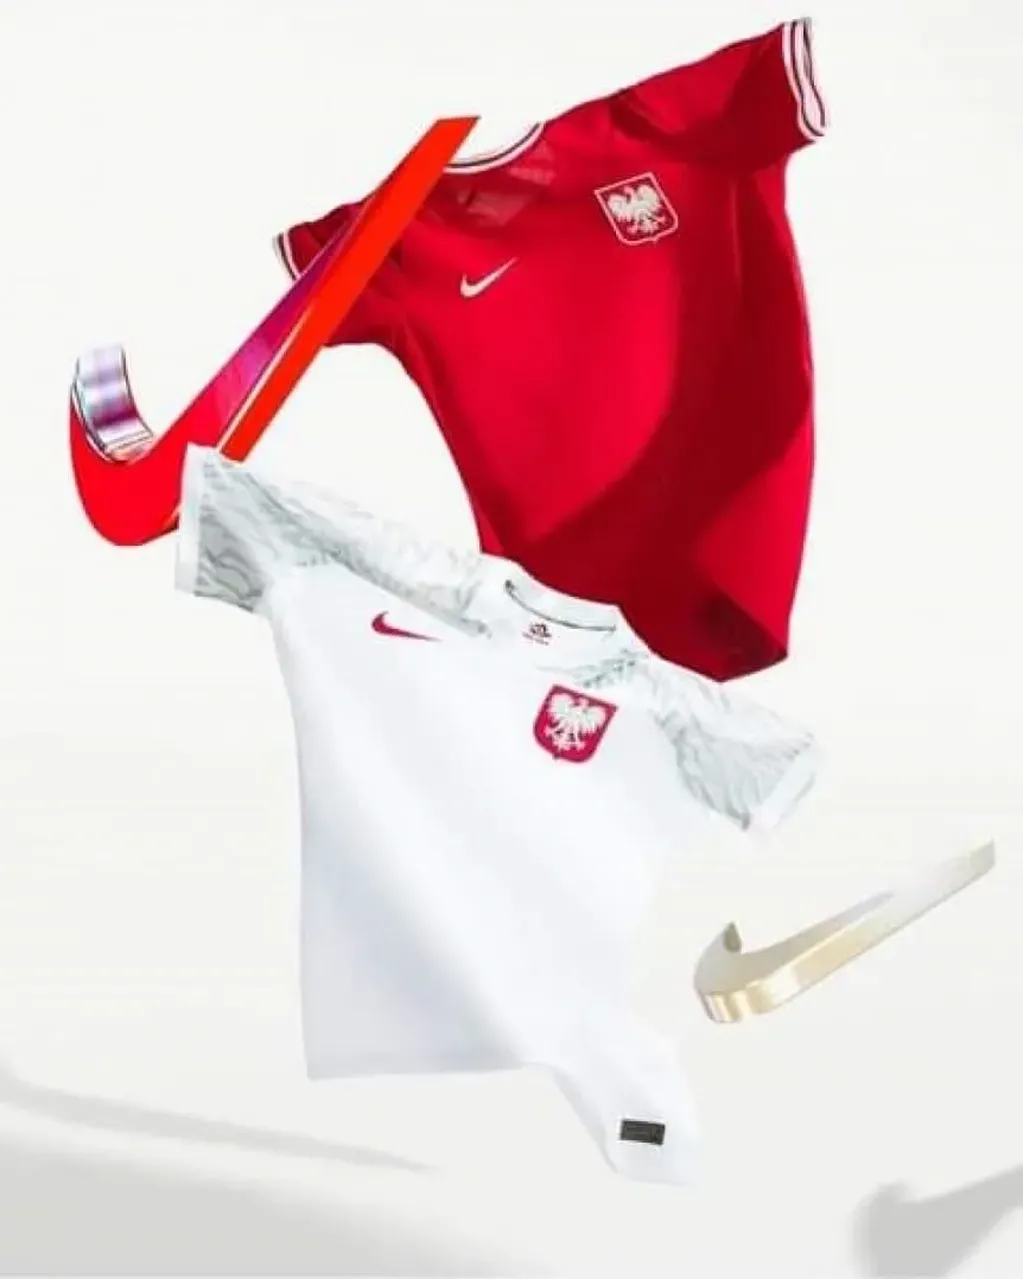 La camiseta de Polonia /Gentileza TyC Sports